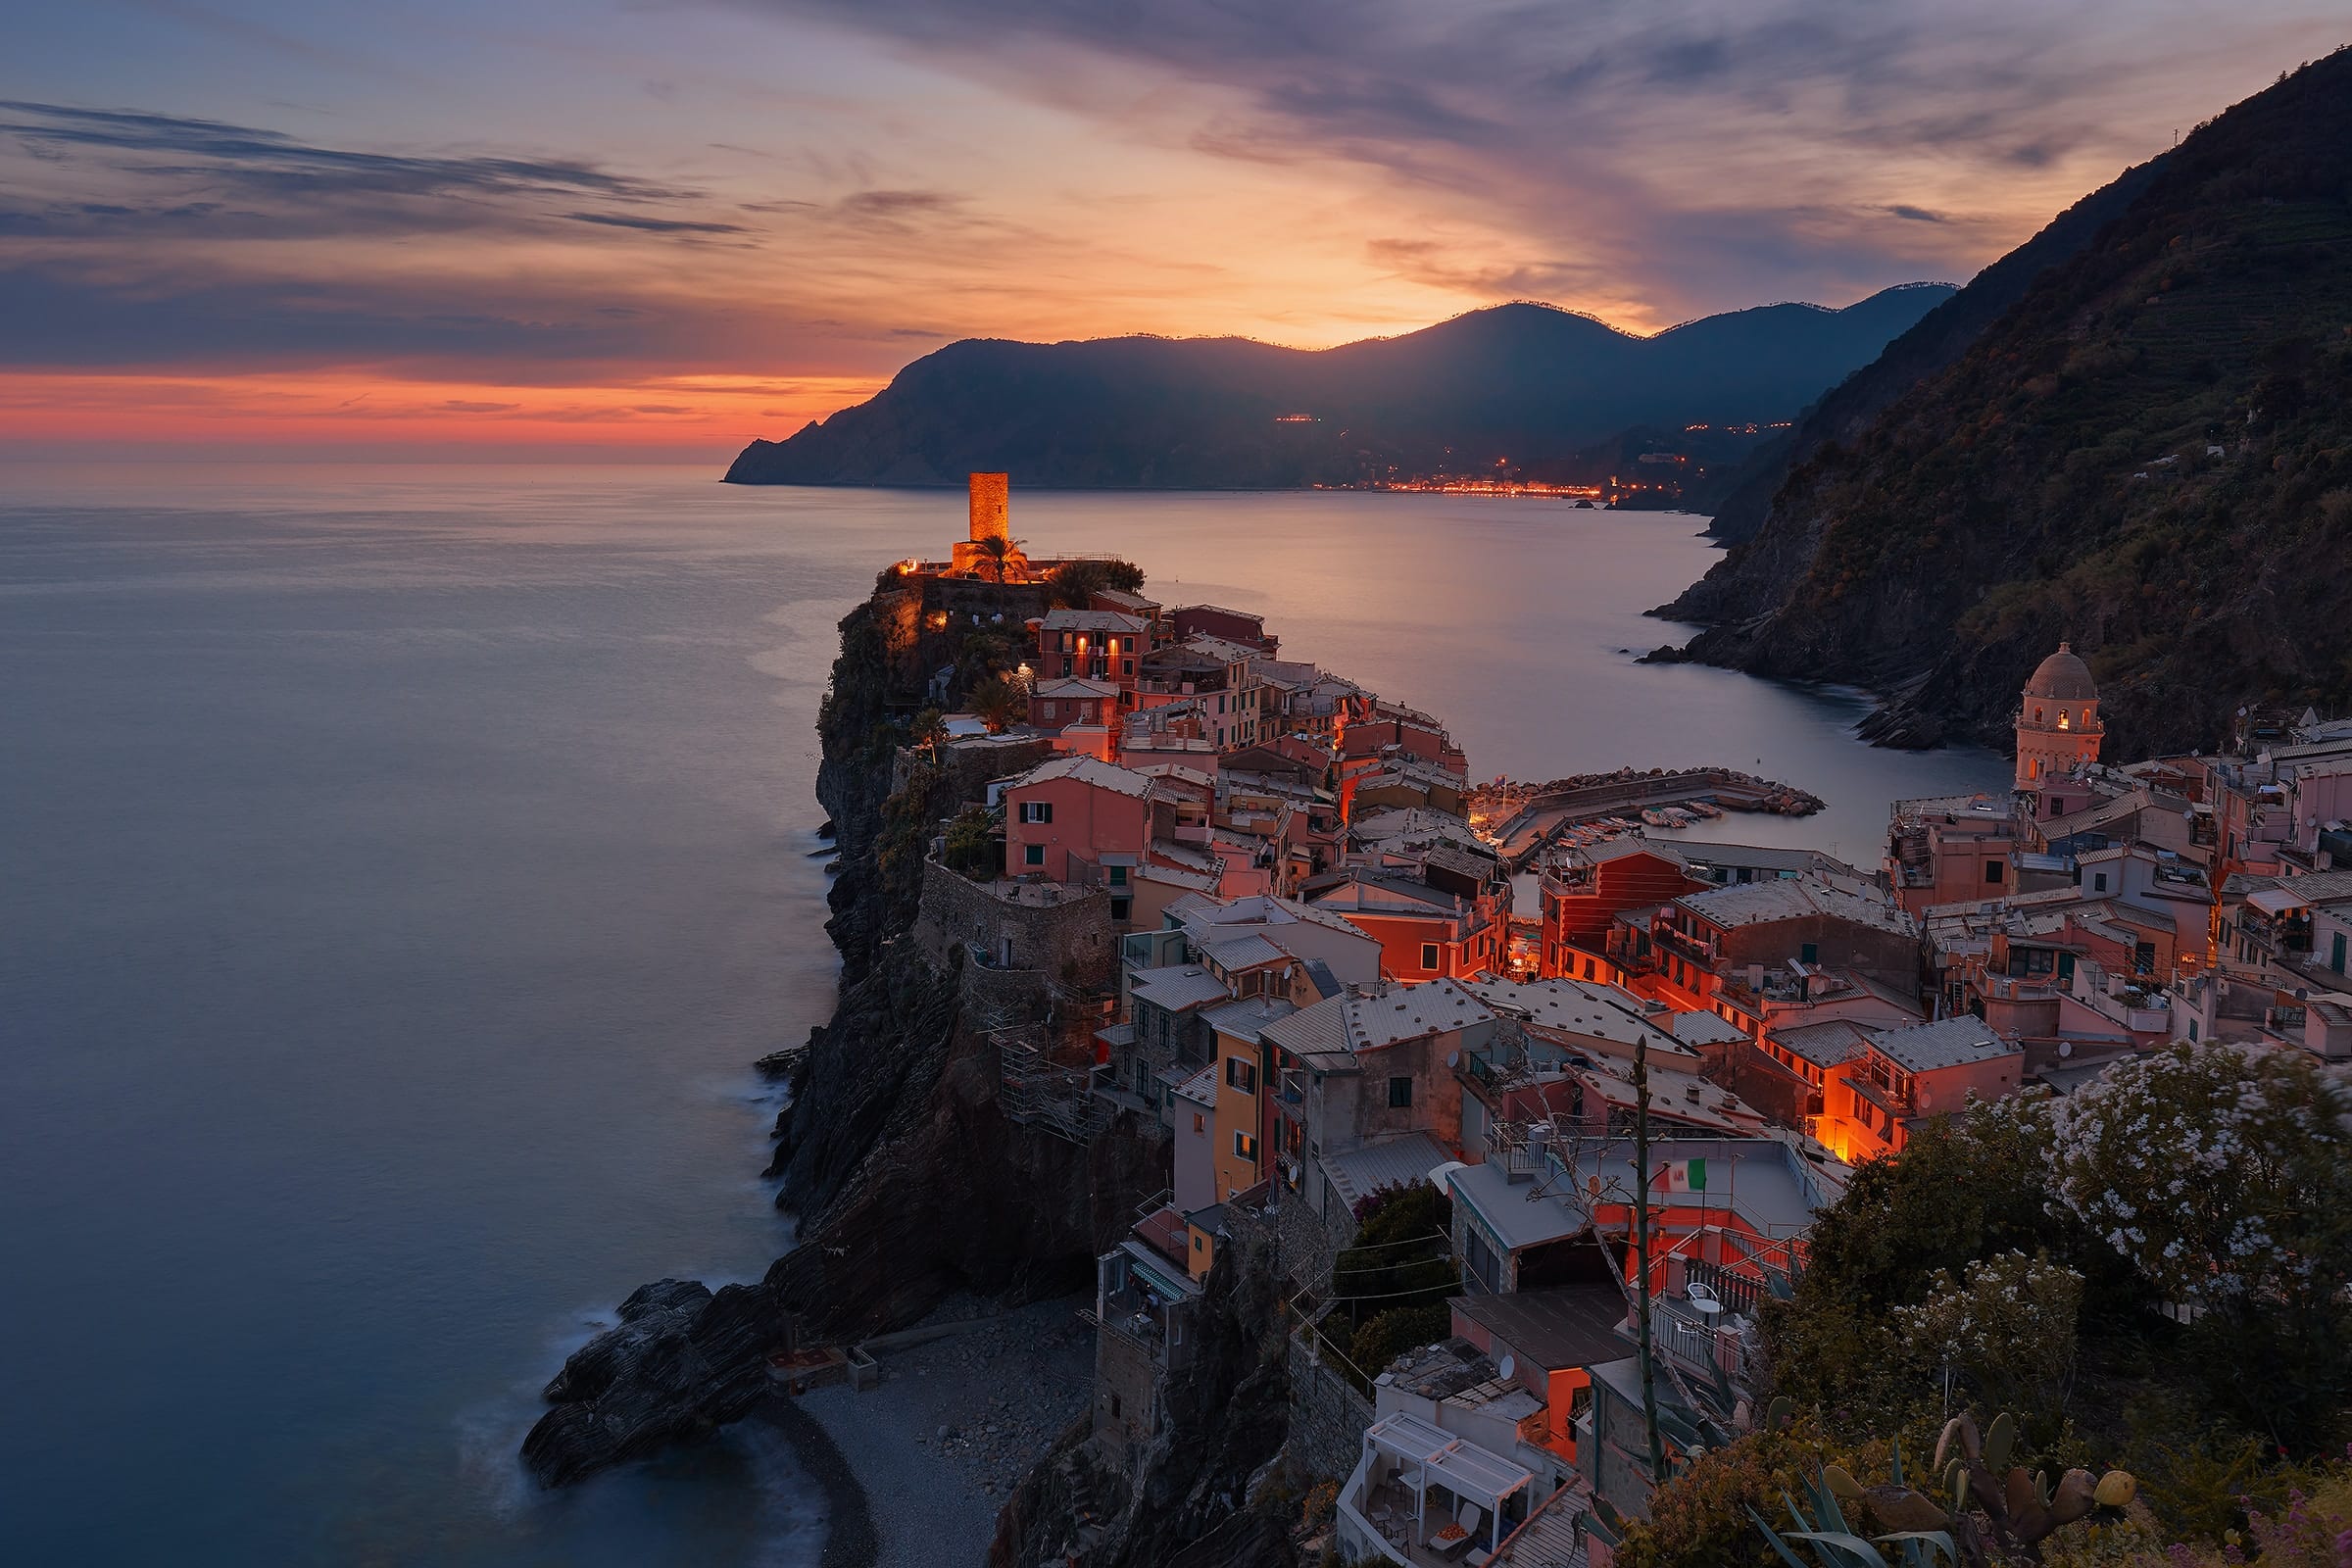 An Italian village on a seaside cliff